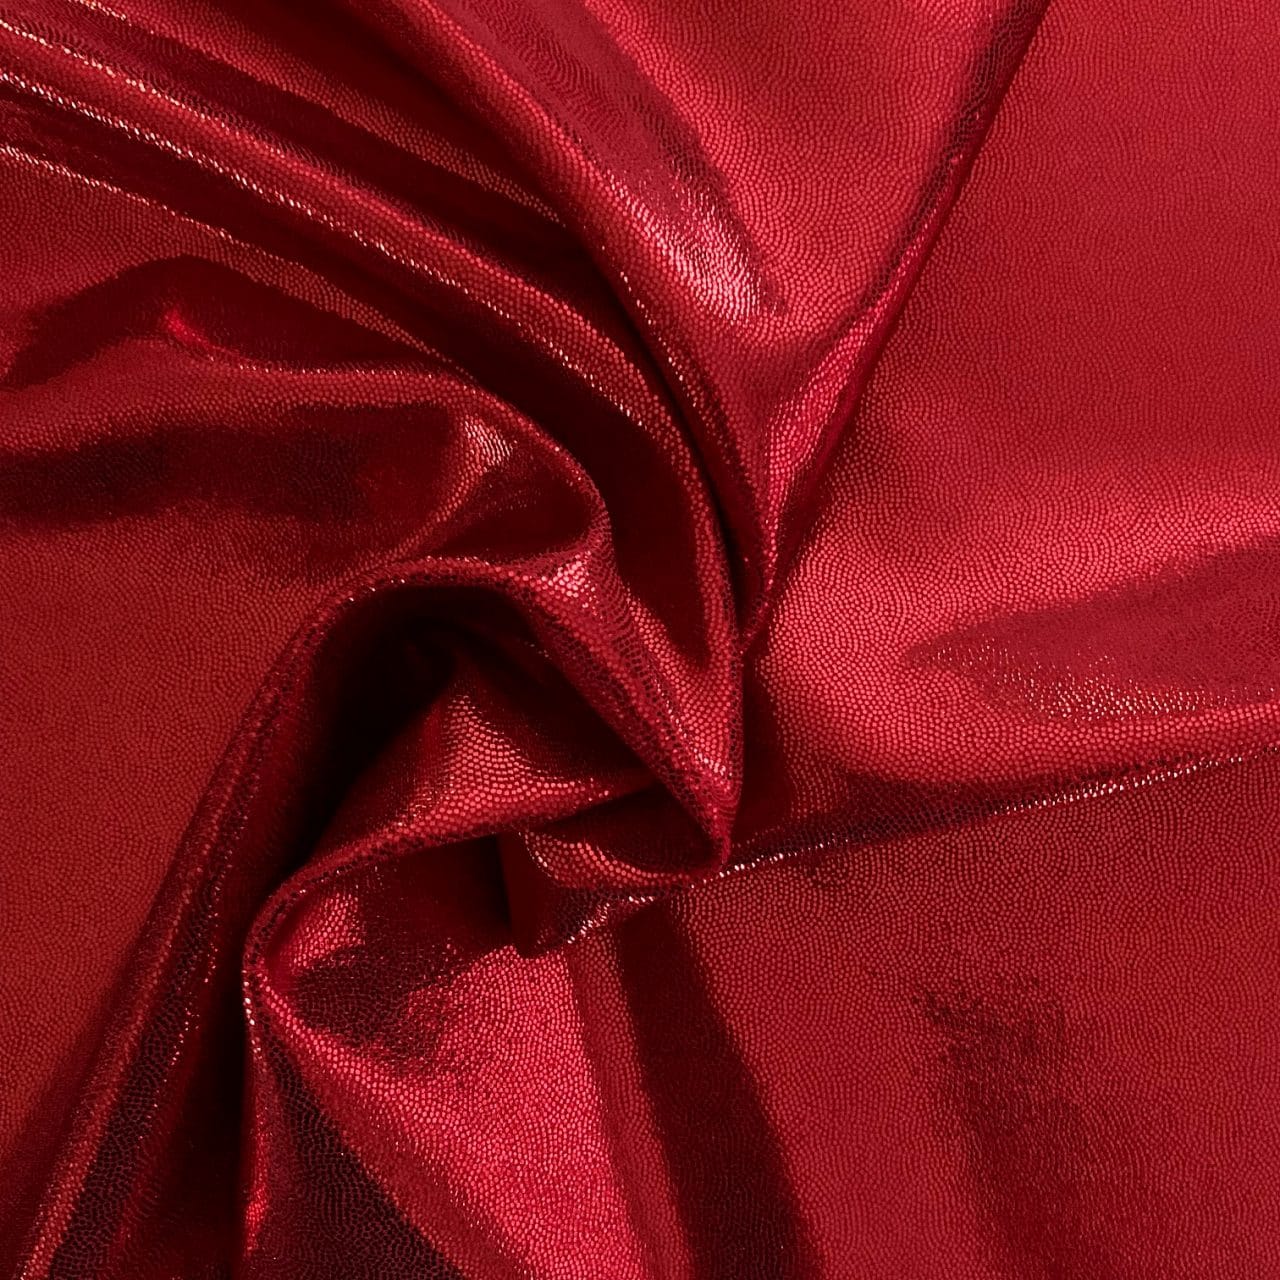 https://www.solidstonefabrics.com/wp-content/uploads/2018/06/Metallic-Sheen-Red-Team-Red-Main-Solid-Stone-Fabrics-Inc.-Stretch-Metallic-Fabrics-By-The-Yard.jpg